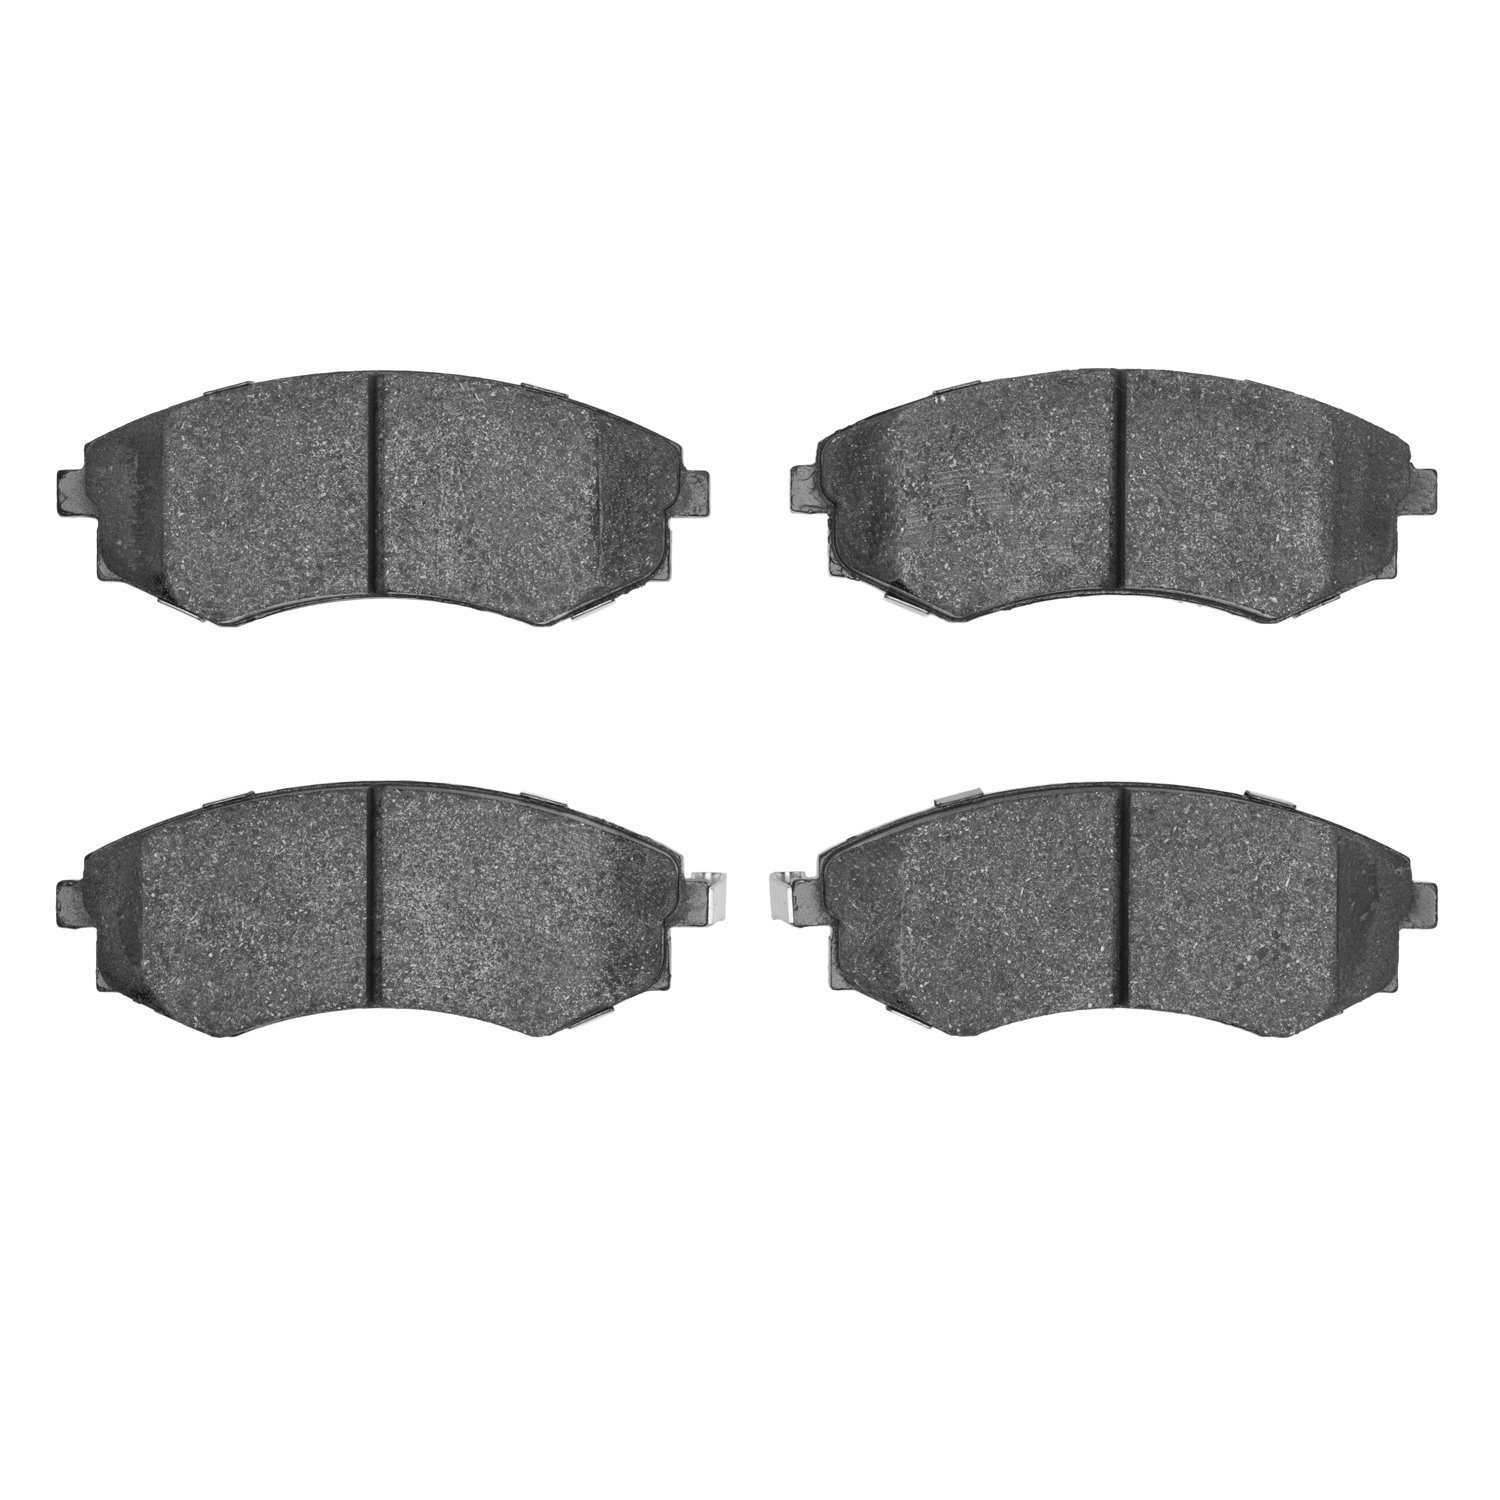 1310-0700-00 3000-Series Ceramic Brake Pads, 1989-2006 Multiple Makes/Models, Position: Front